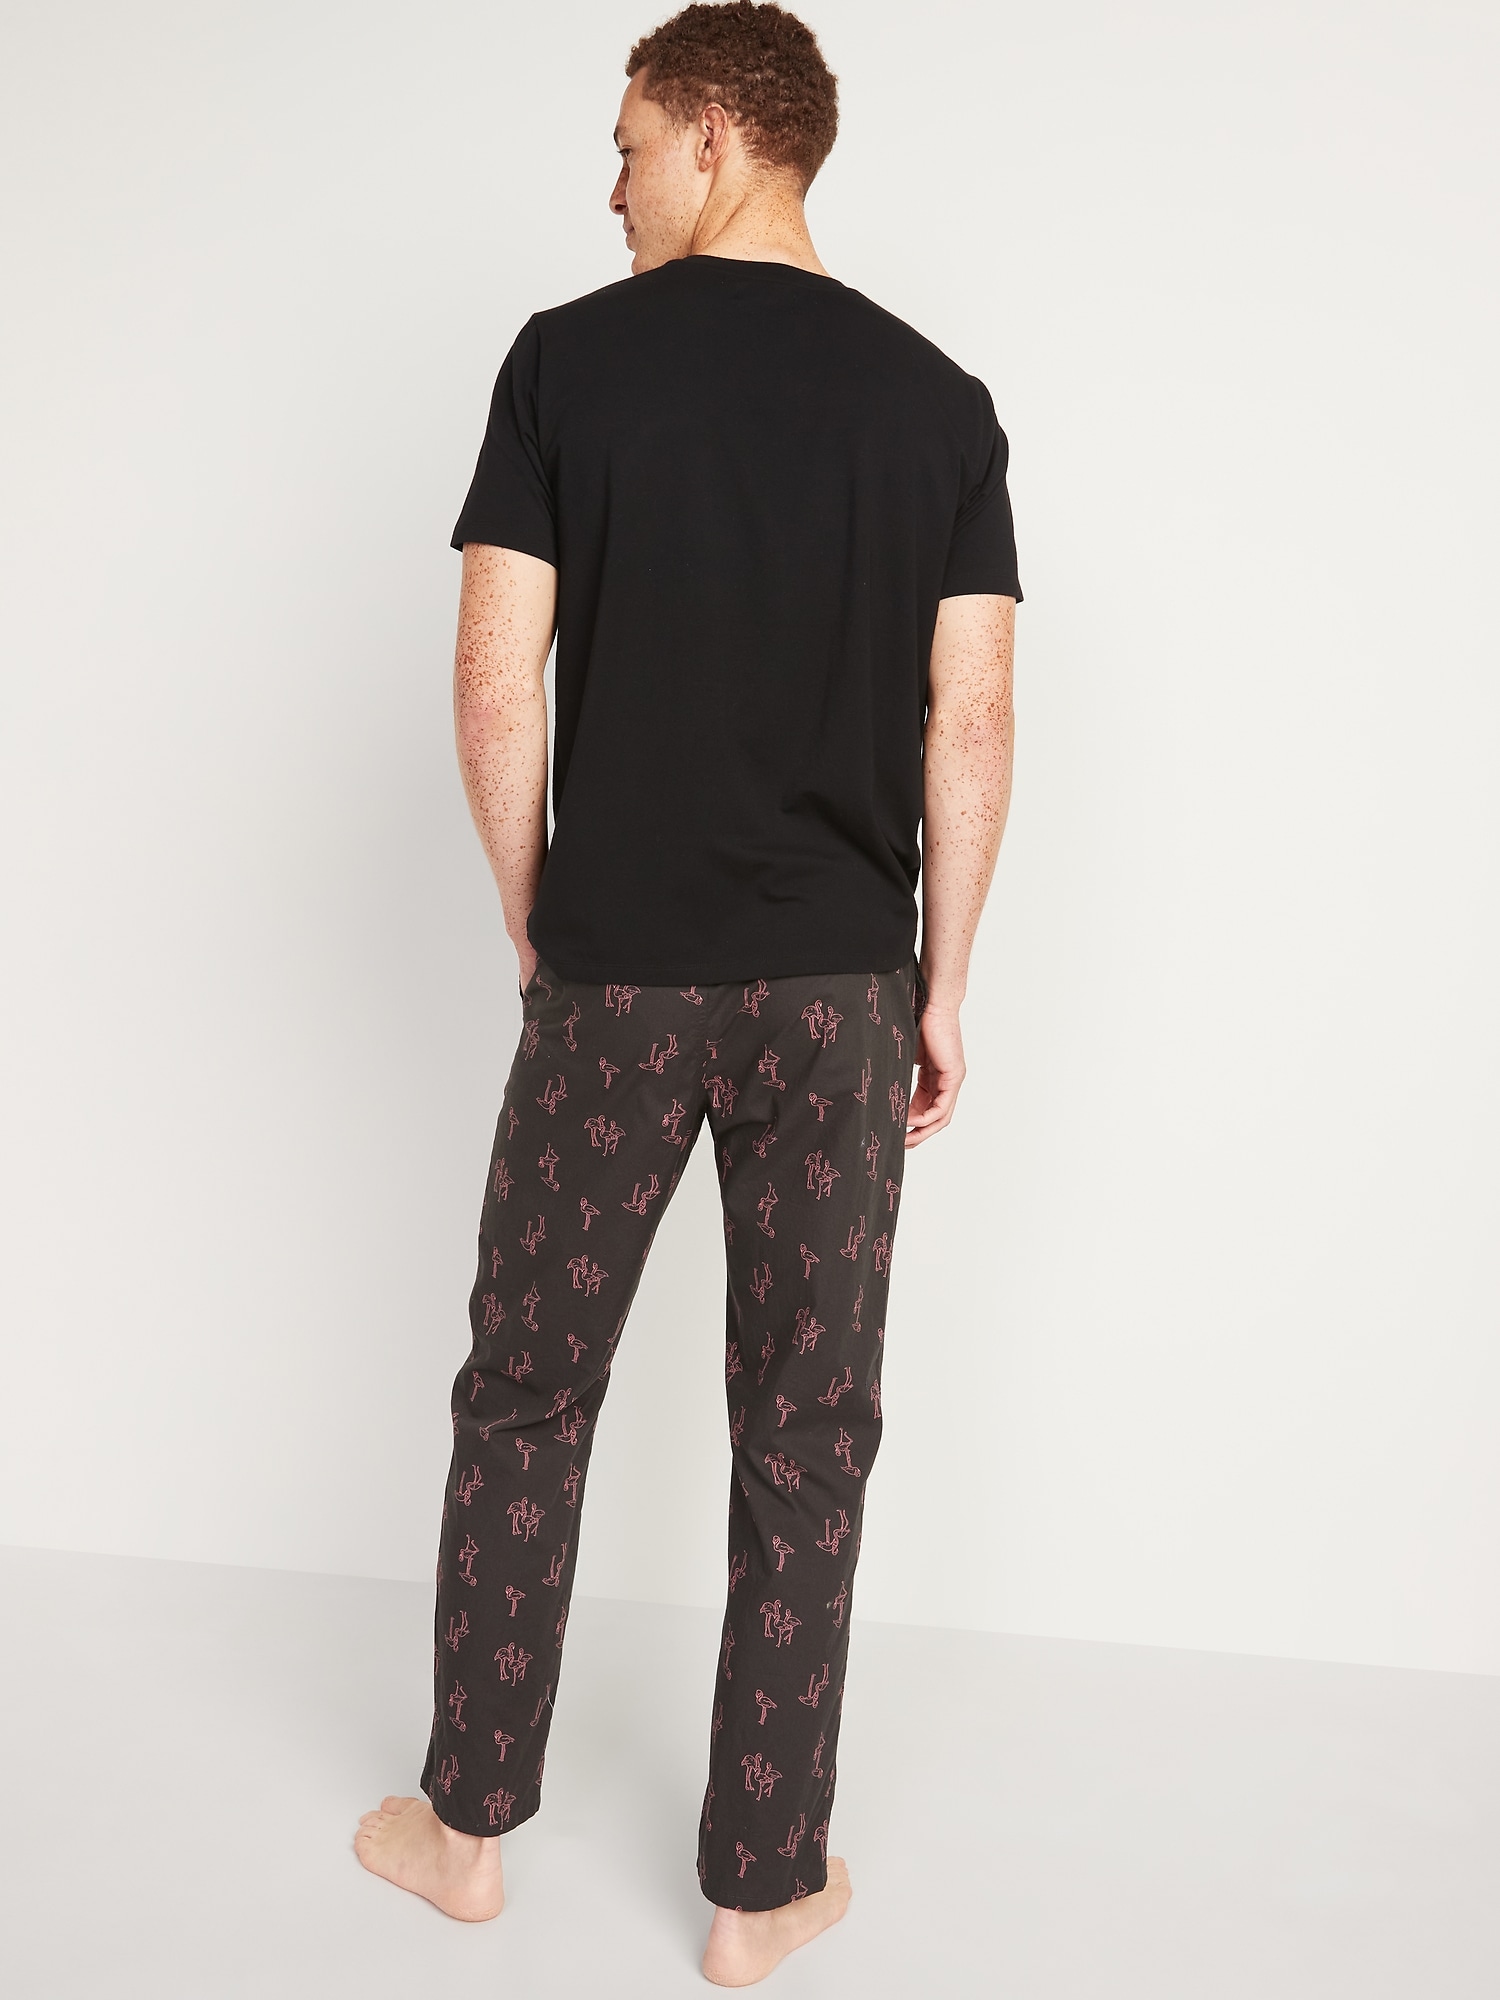 Printed Poplin Pajama Pants for Men, Old Navy